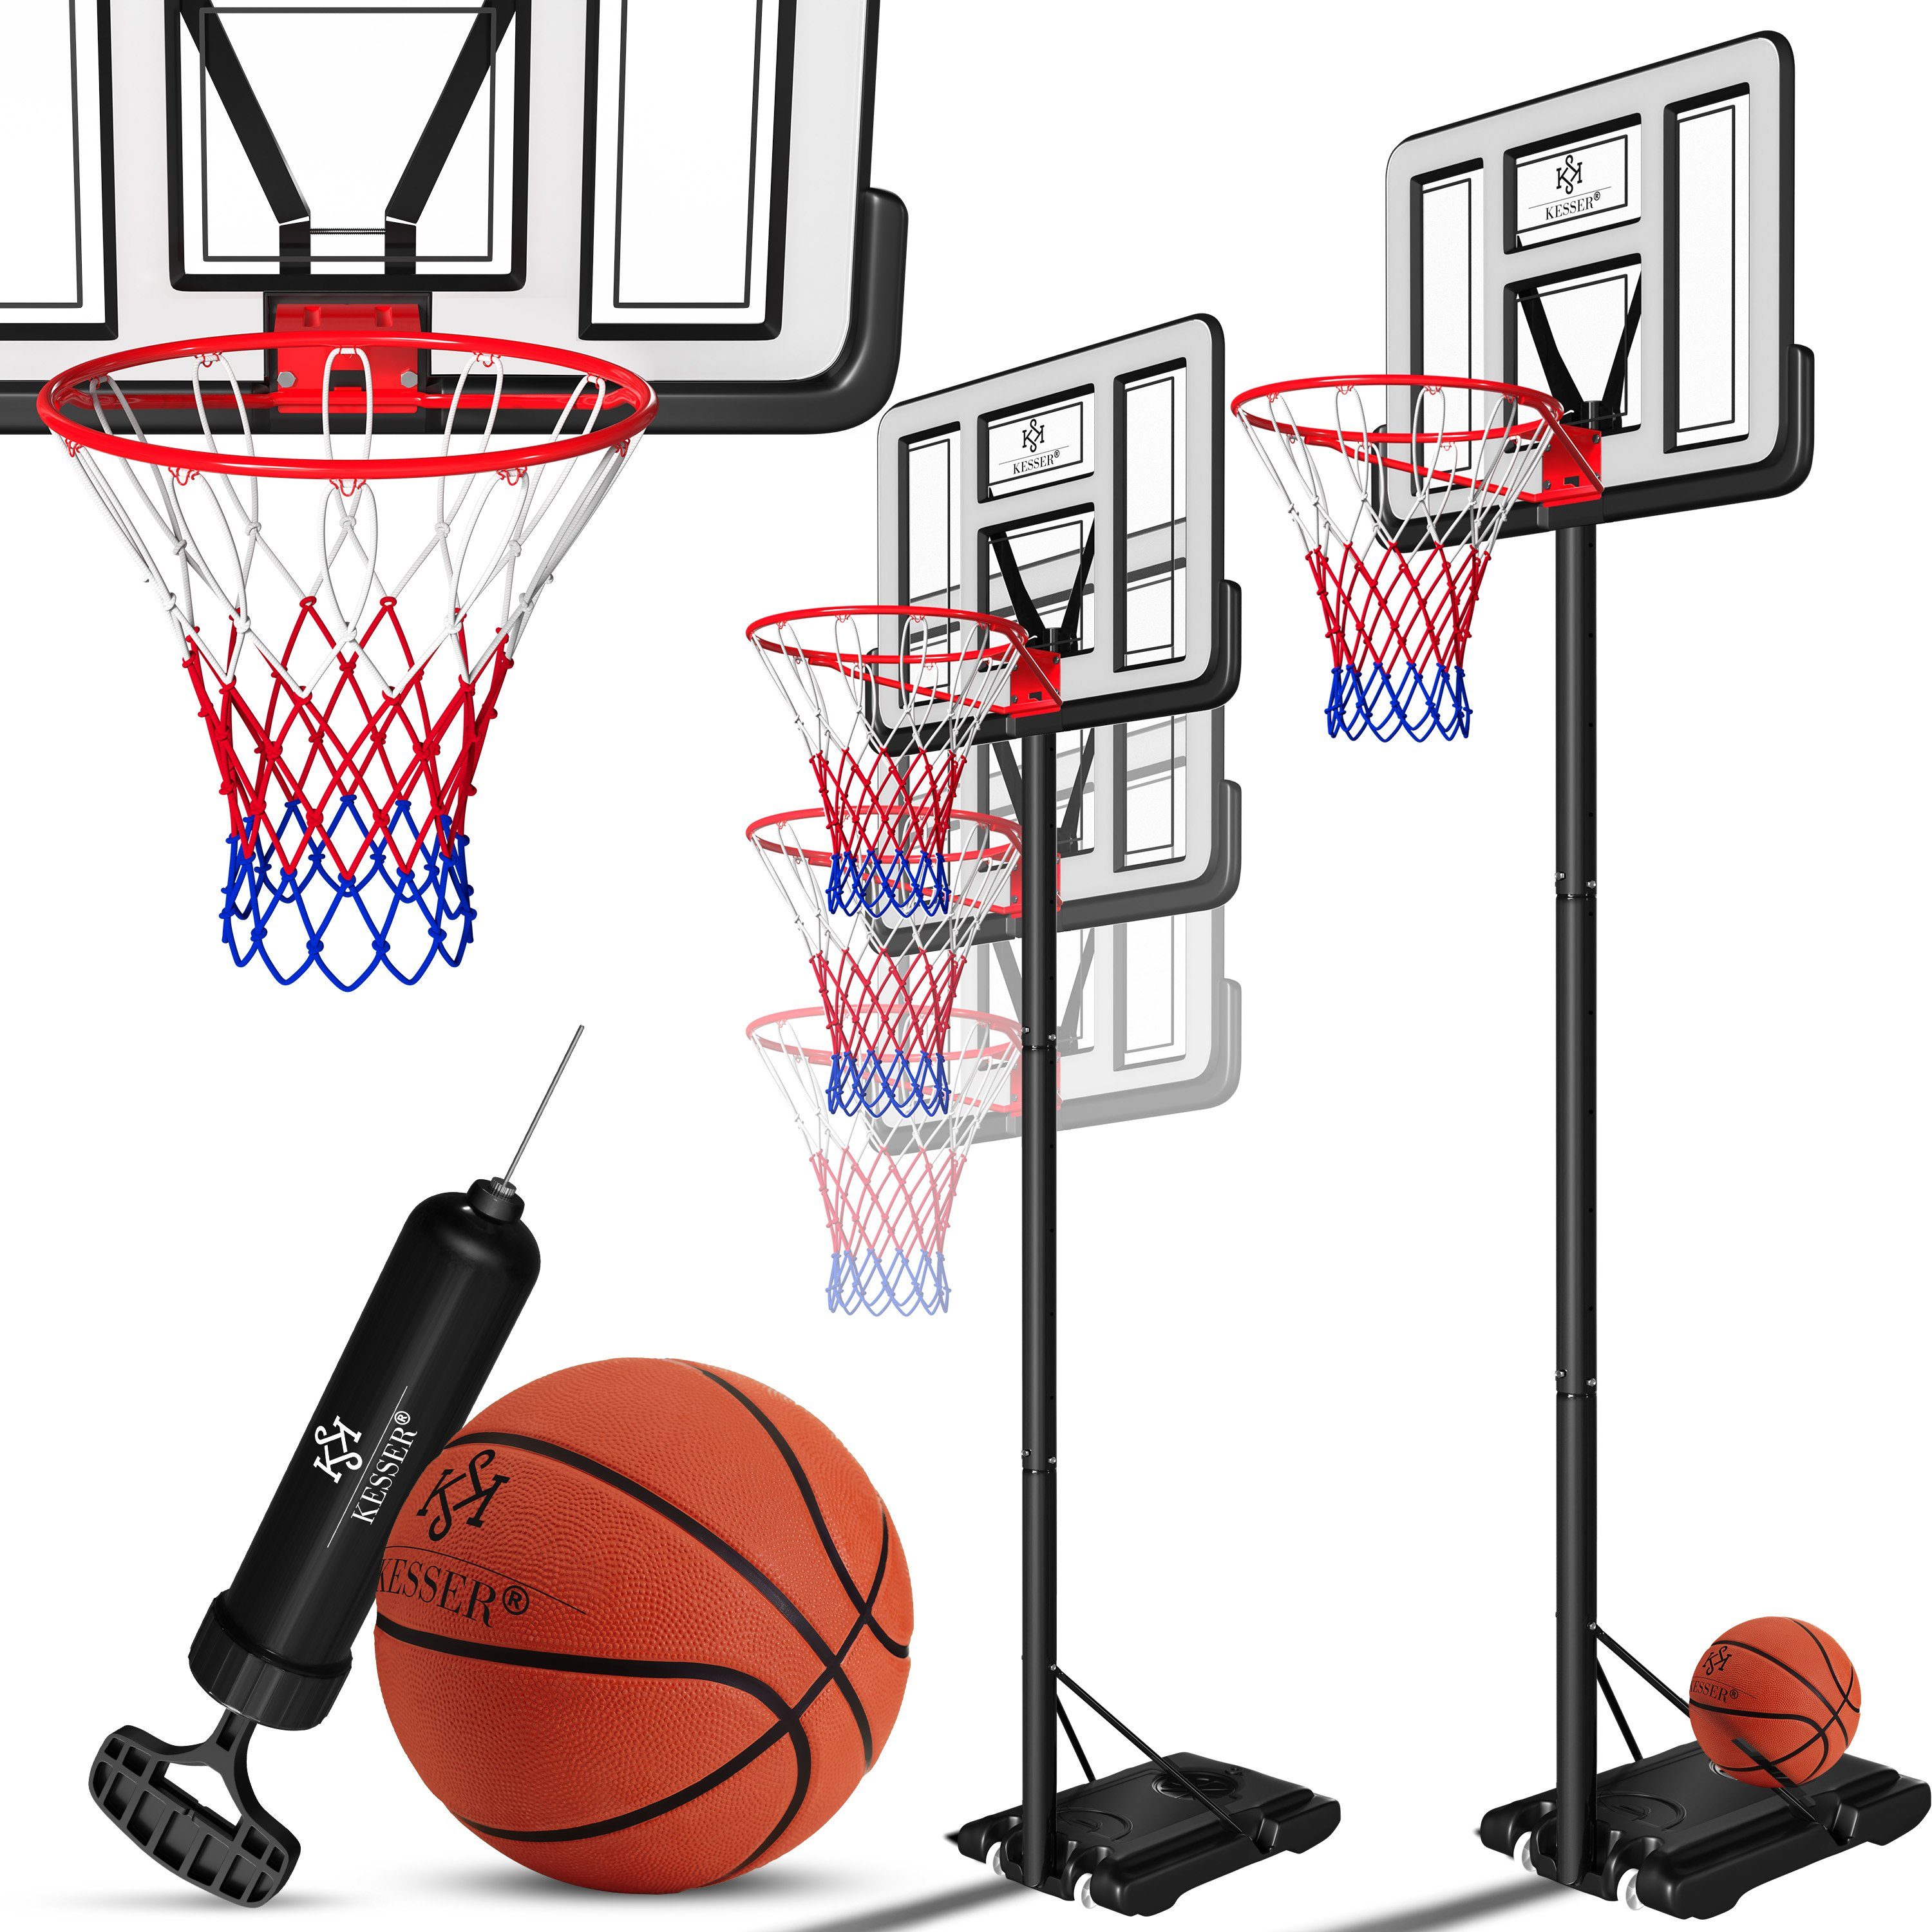 Basketballkorb Basketballständer Basketballanlage Korbanlage Mobil Kinder 